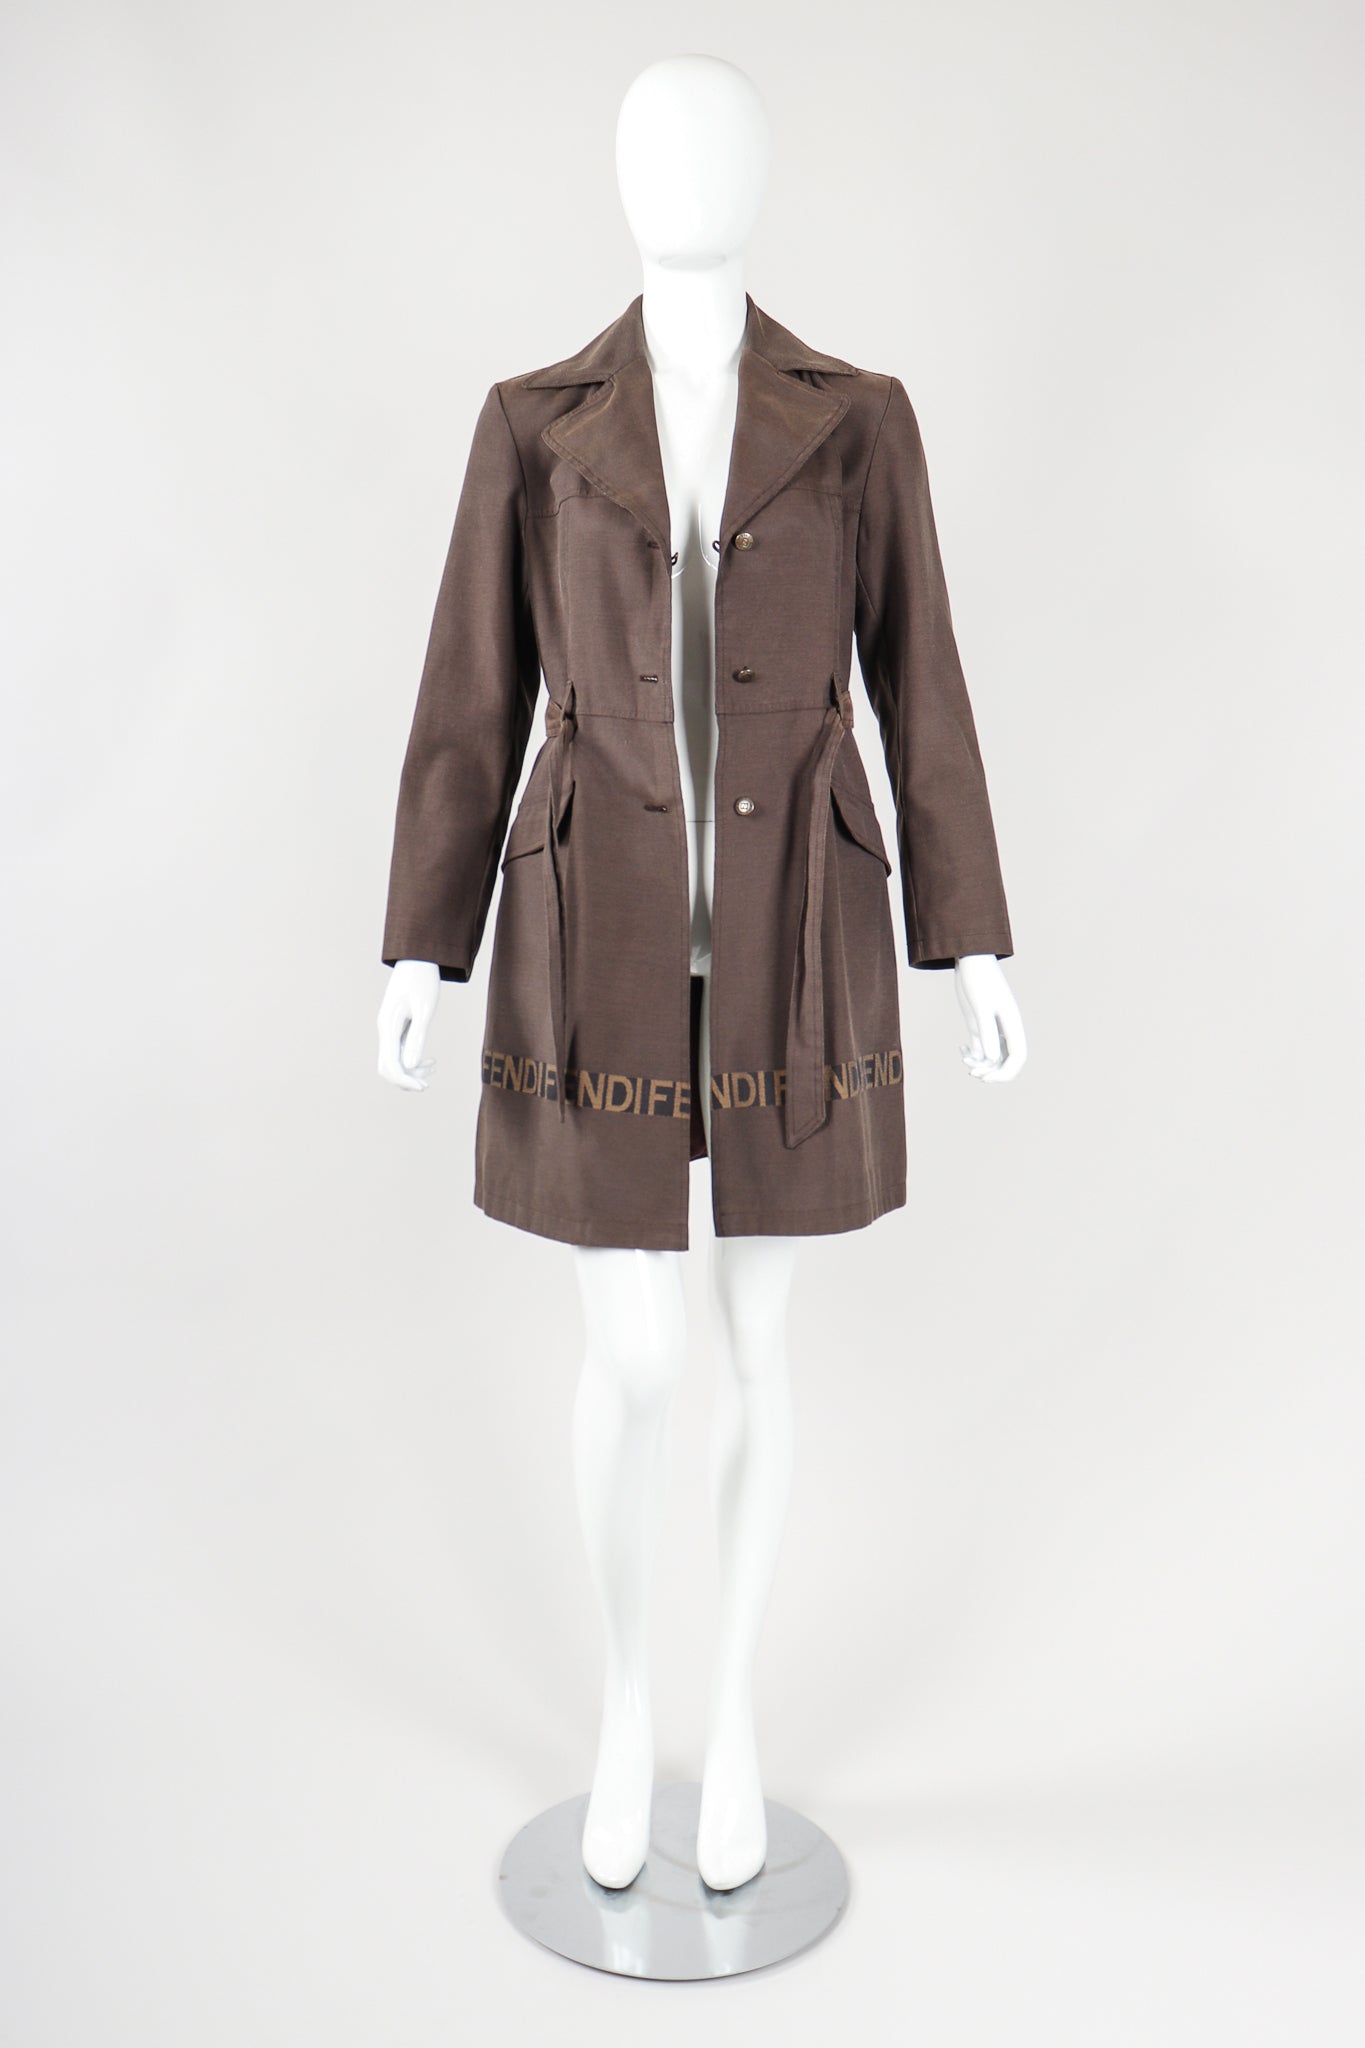 Recess Vintage Fendi Brown Canvas Trench Coat on Mannequin, open